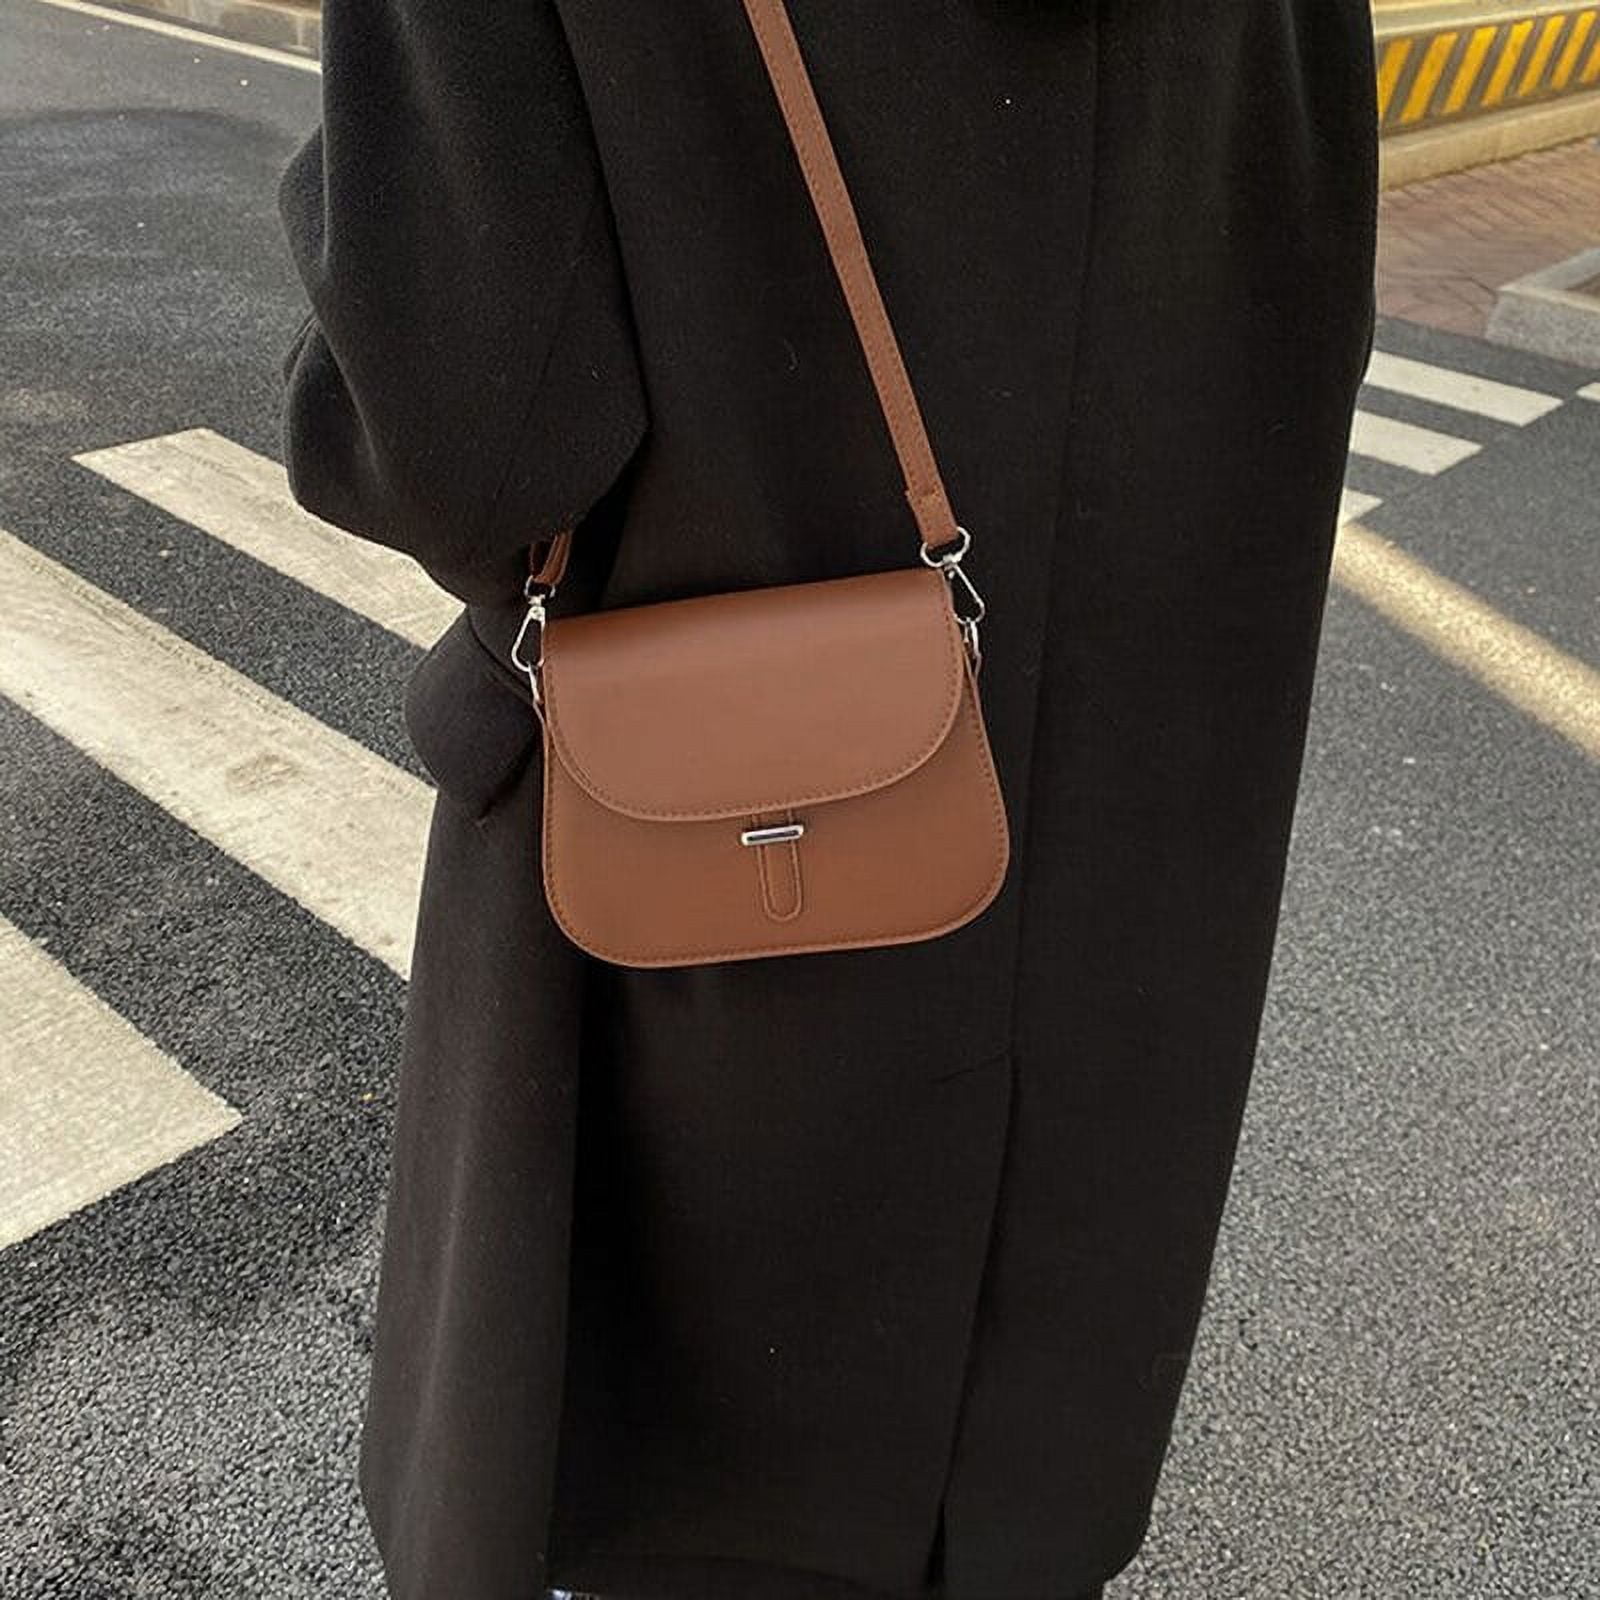 CoCopeaunt Vintage Simple Shoulder Bags For Women Casual